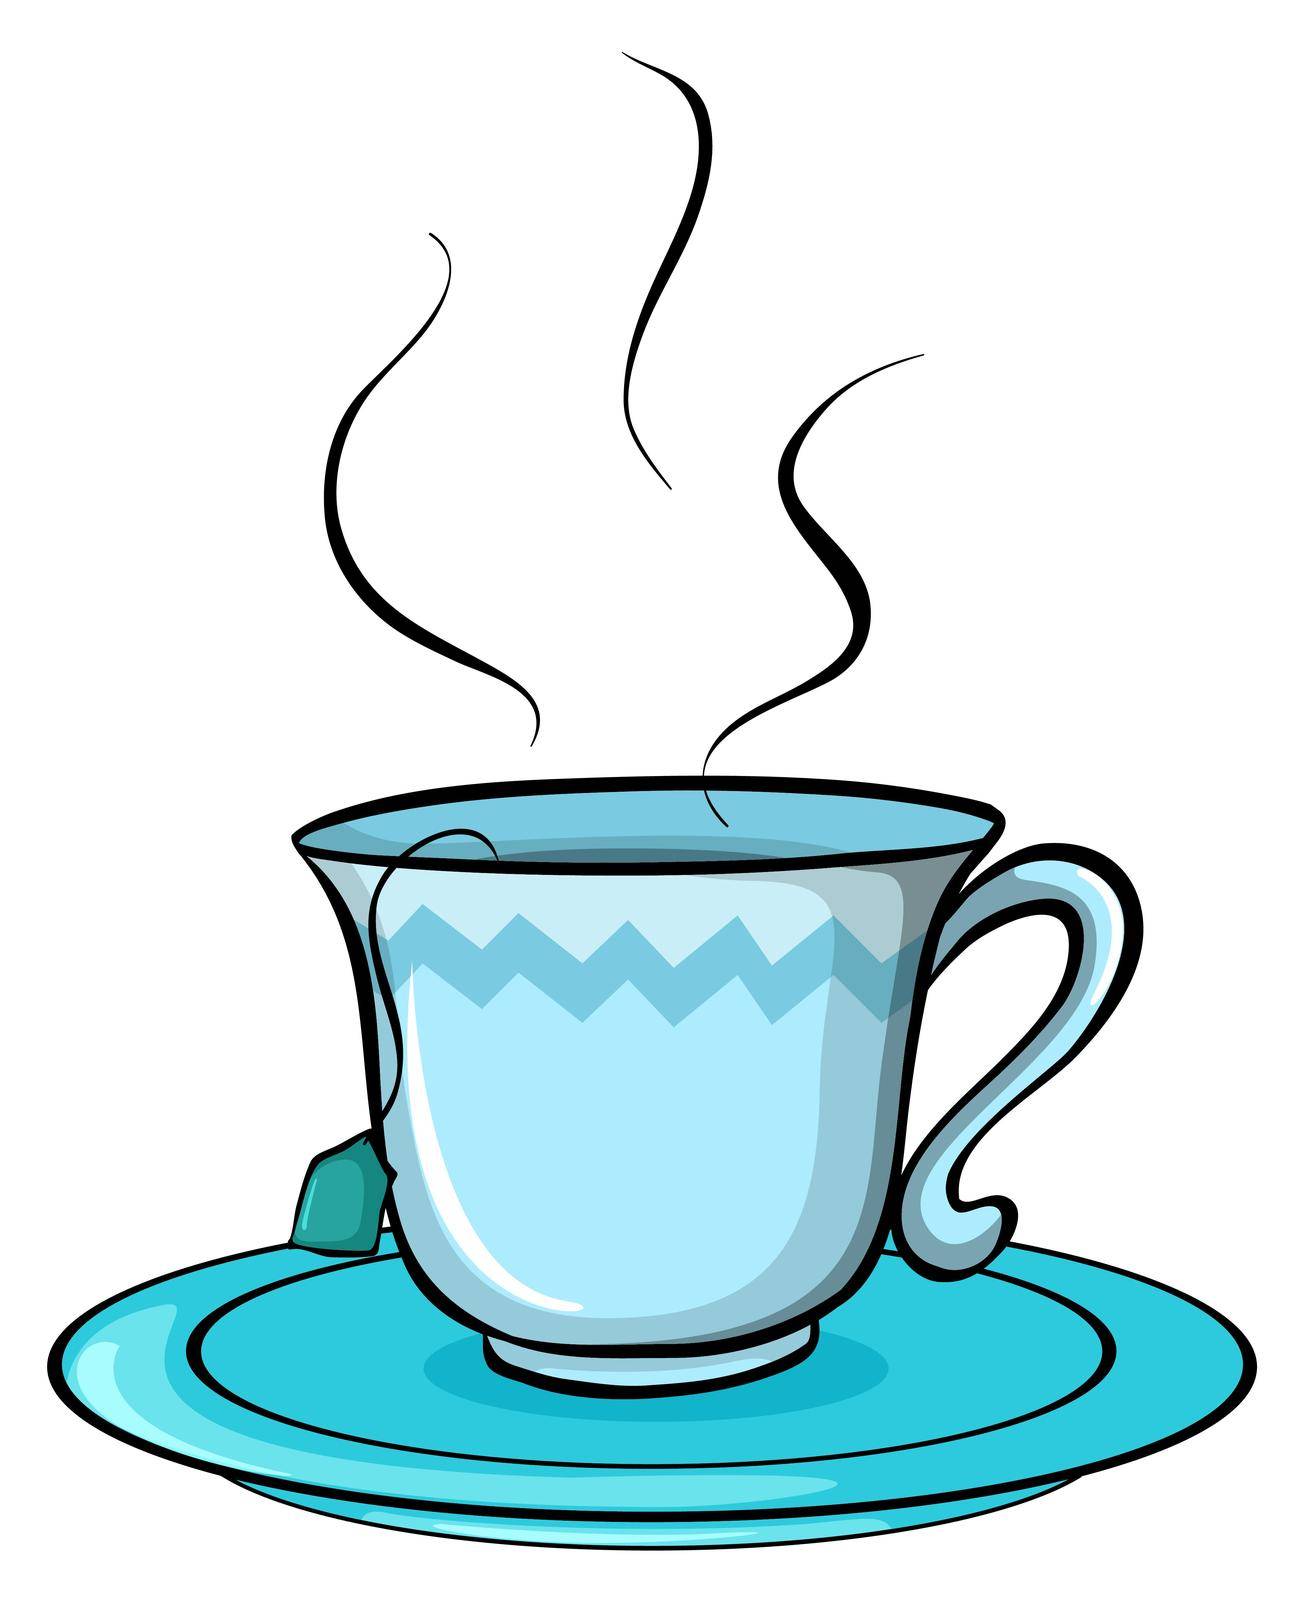 Cup of tea by iimages